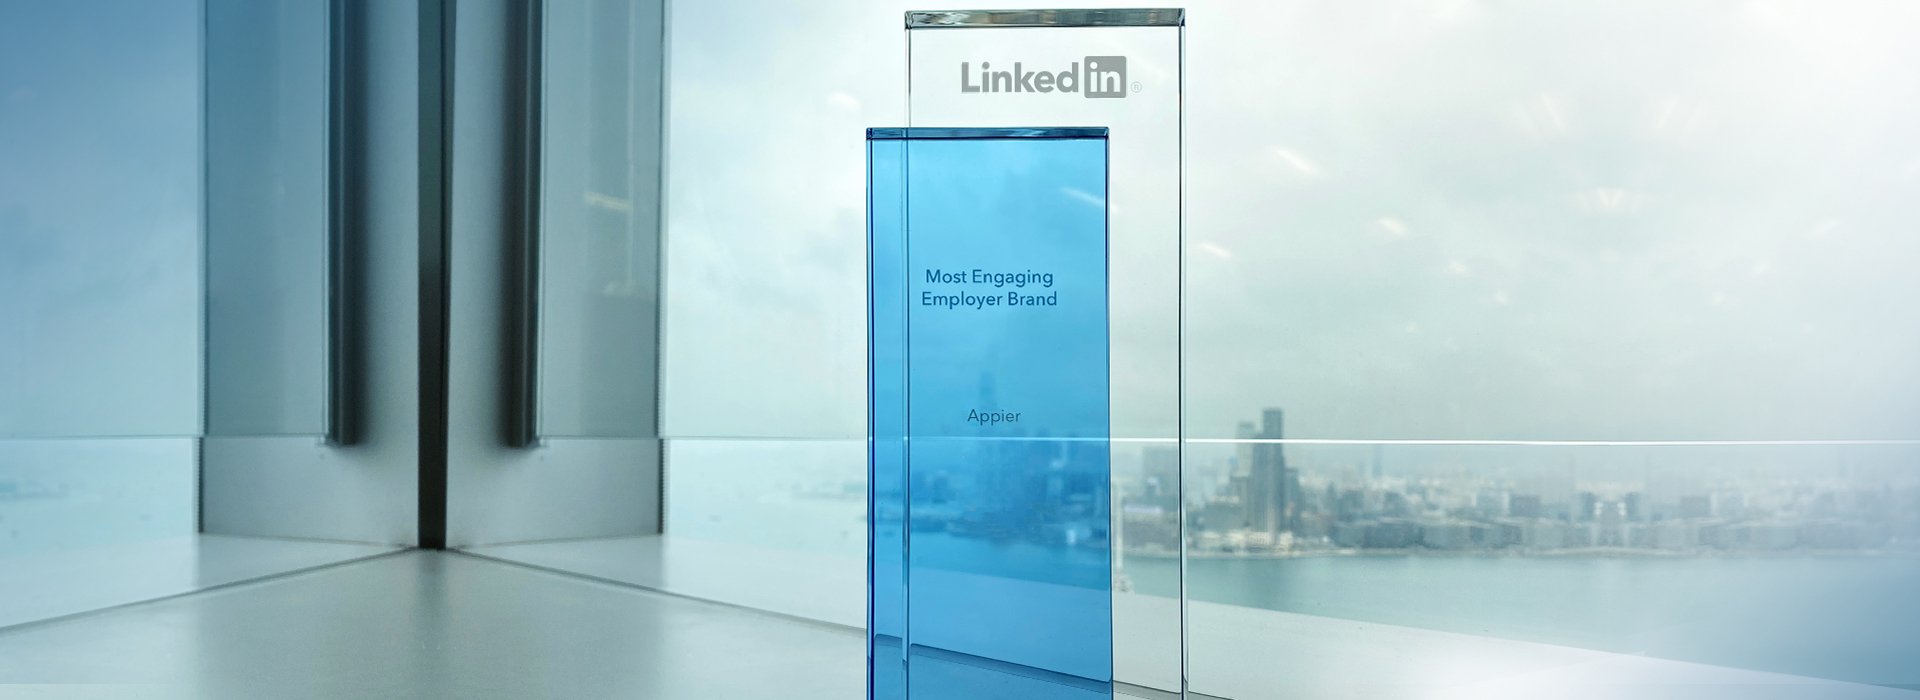 PR_LinkedIn-Award-News-Banner-1-1